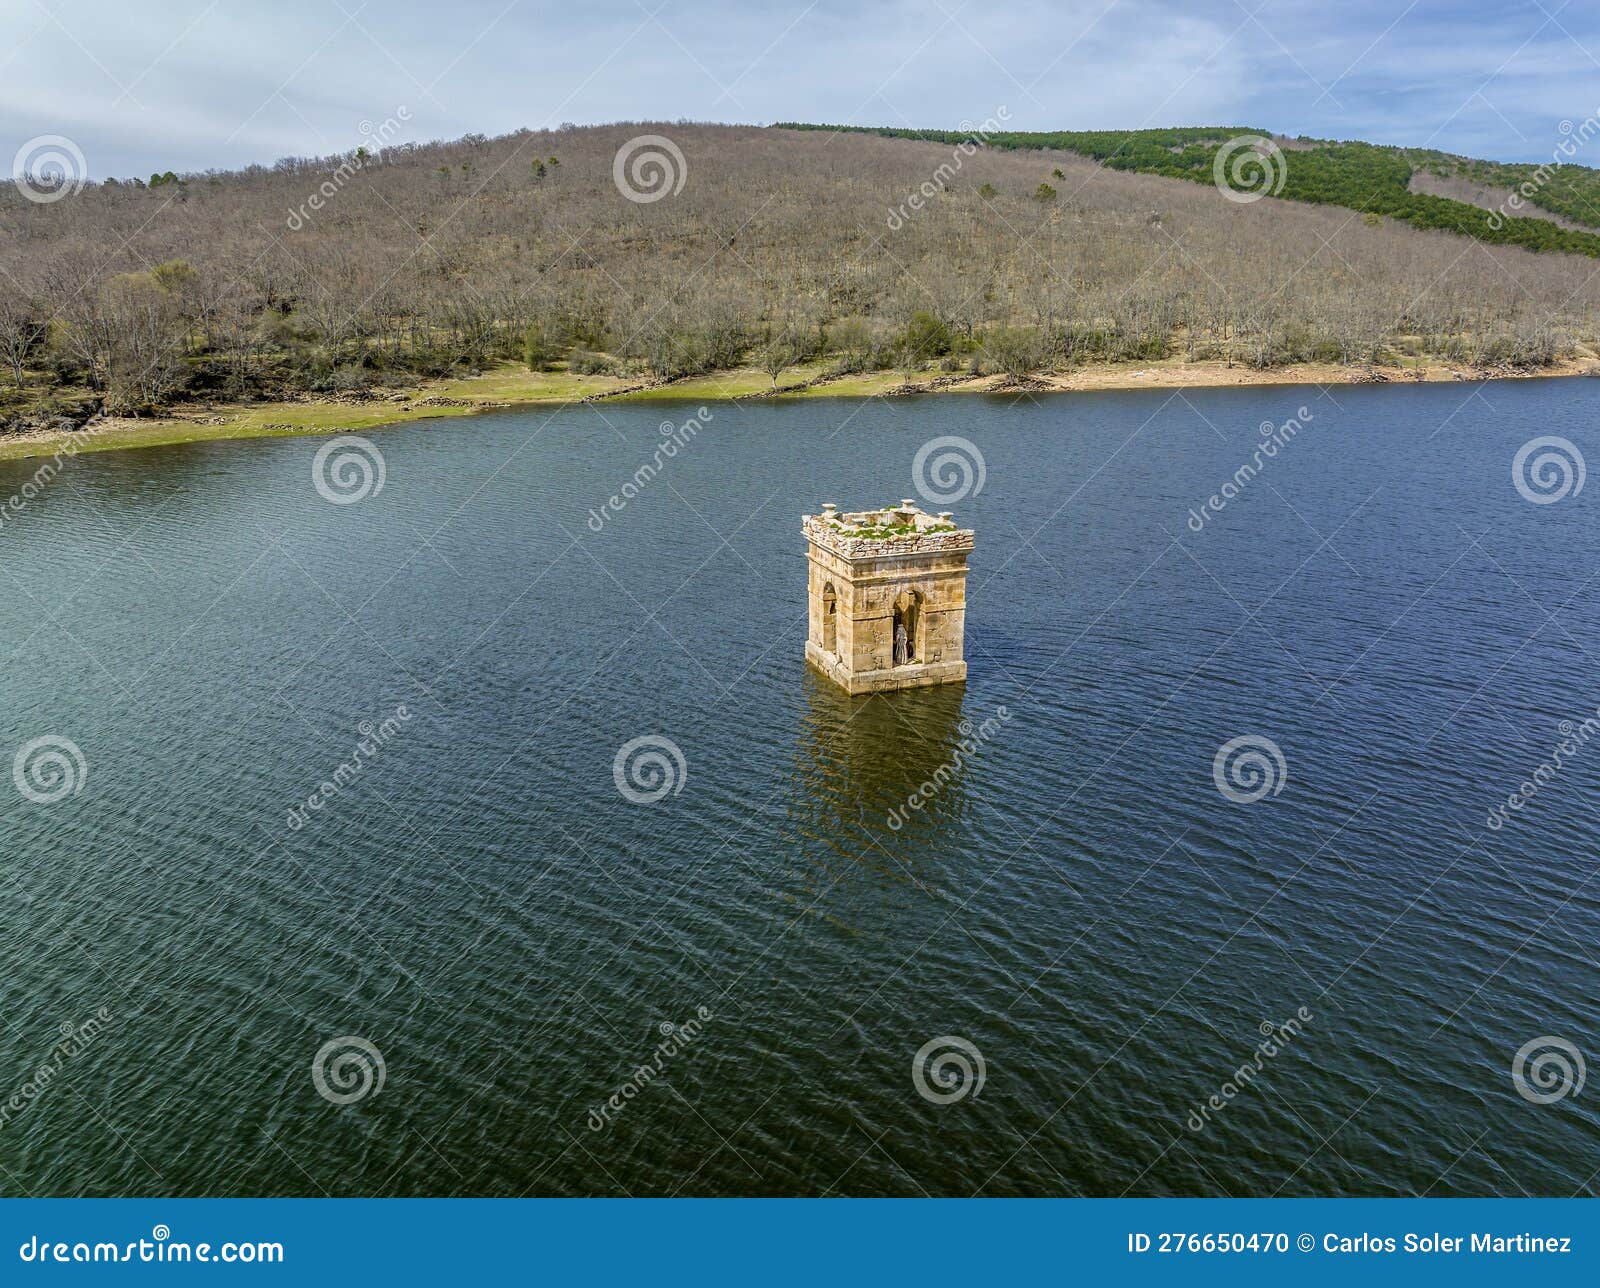 cuerda del pozo reservoir the bell tower of the church of la muedra soria province